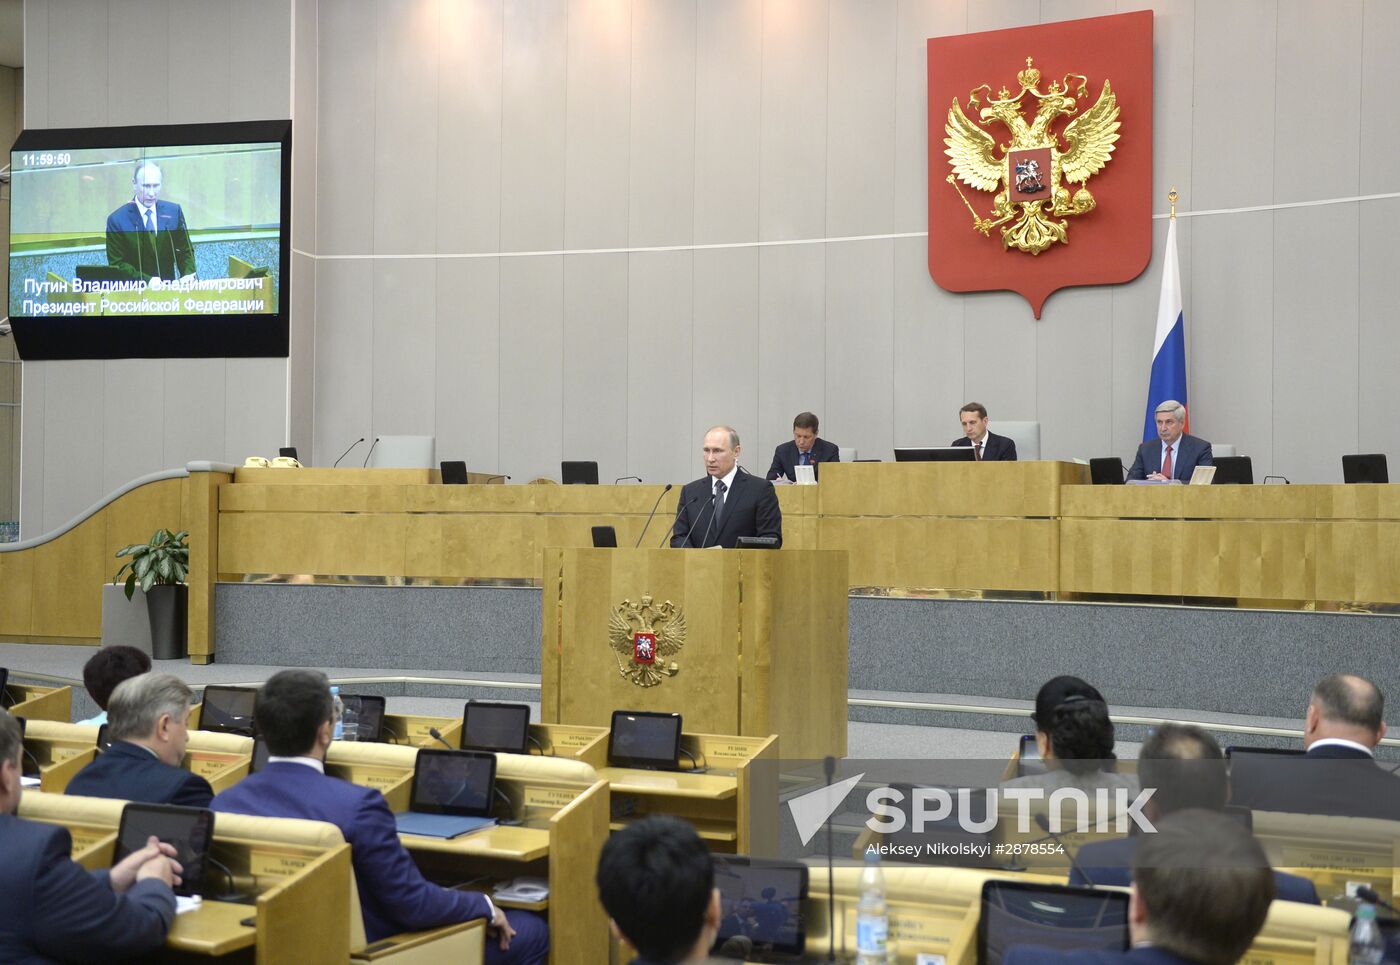 President Vladimir Putin speaks at State Duma plenary meeting